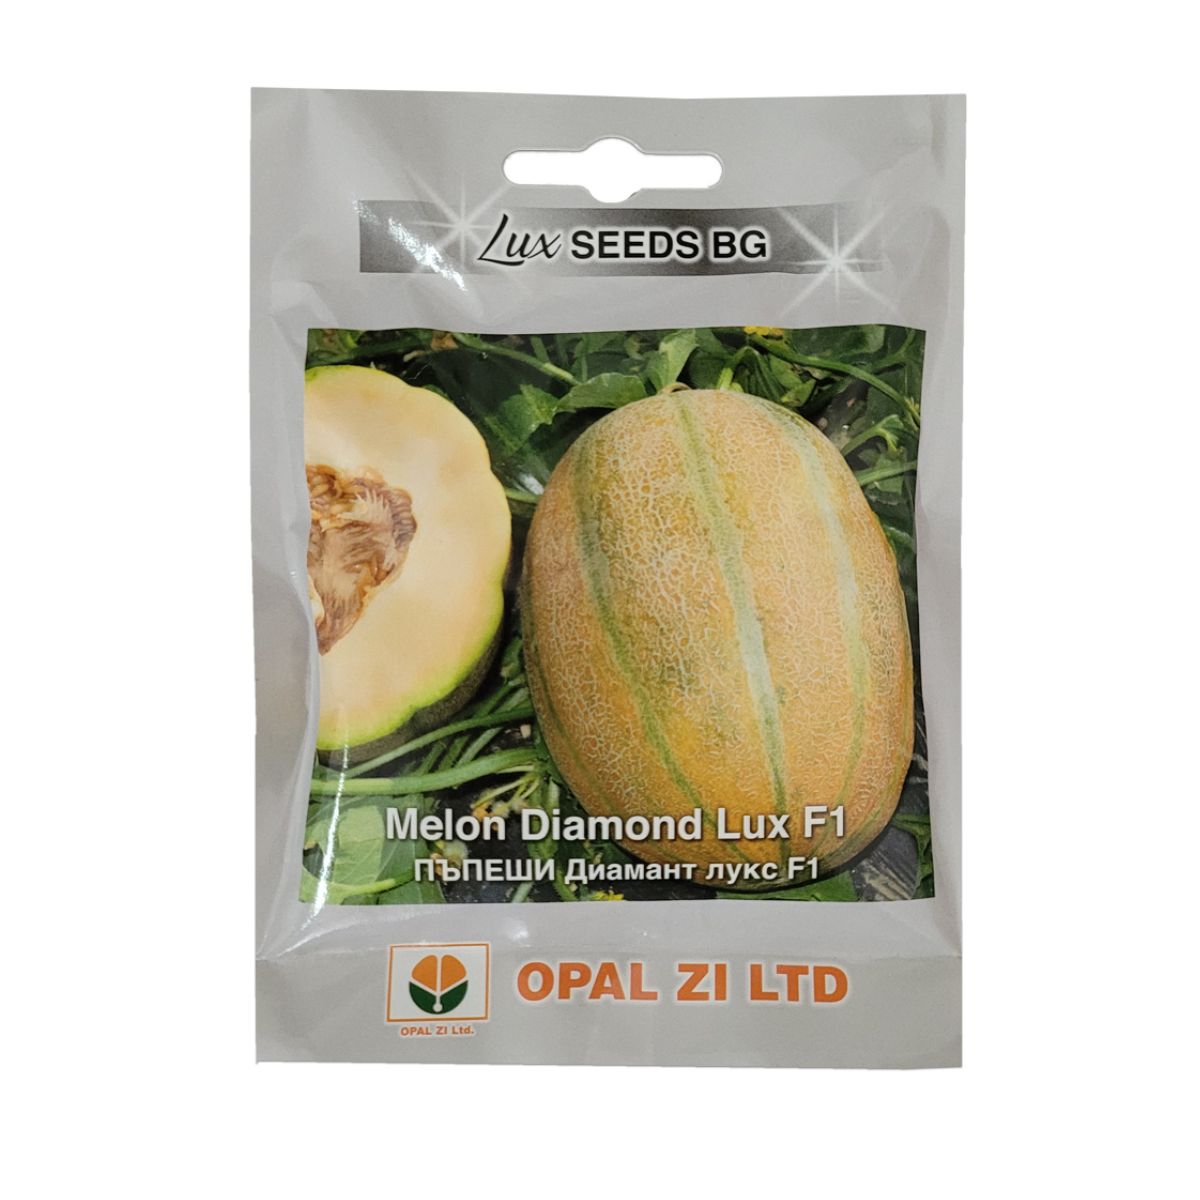 Pepene - Seminte de pepene galben extratimpuriu Diamond LUX, 1 gram, OPAL, hectarul.ro